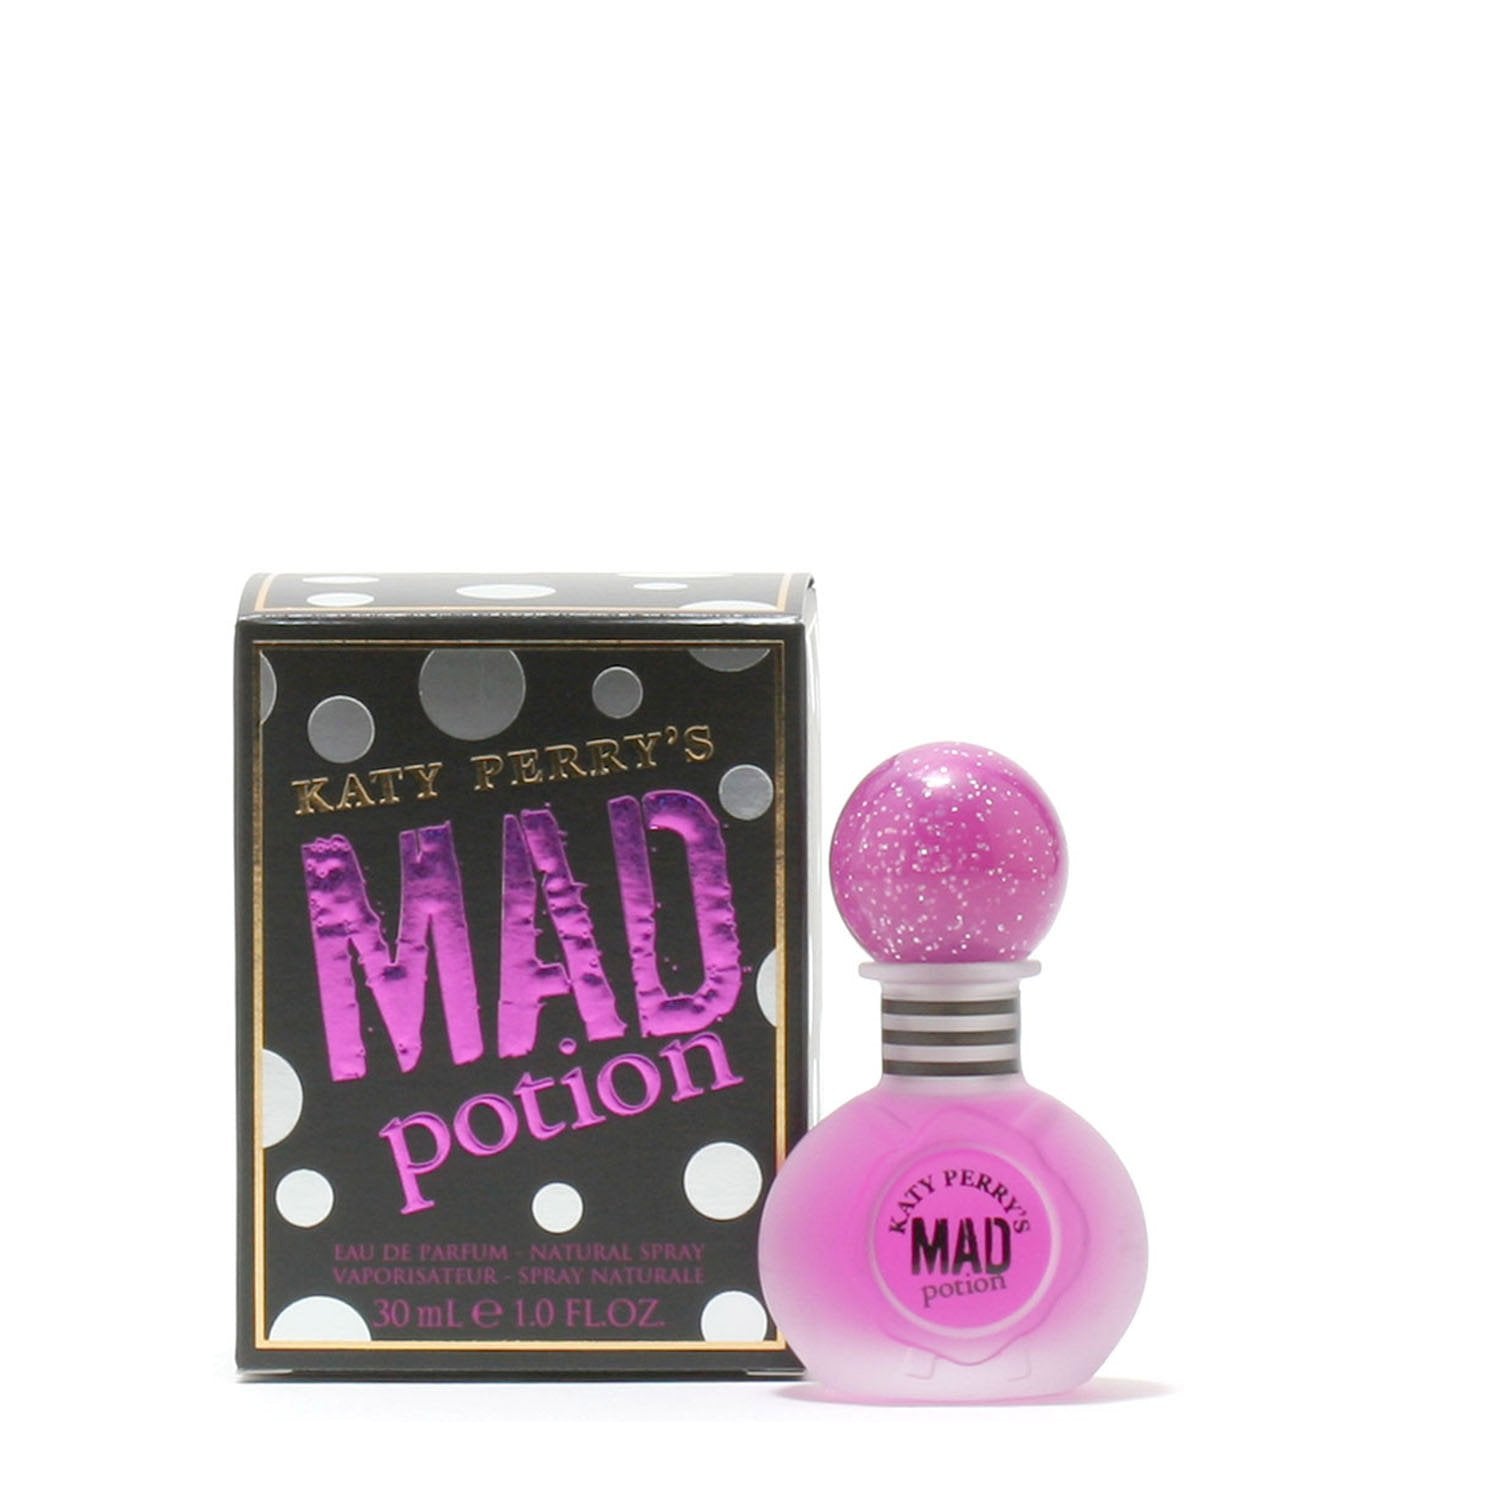 Perfume - KATY PERRY MAD POTION FOR WOMEN - EAU DE PARFUM SPRAY, 1.0 OZ